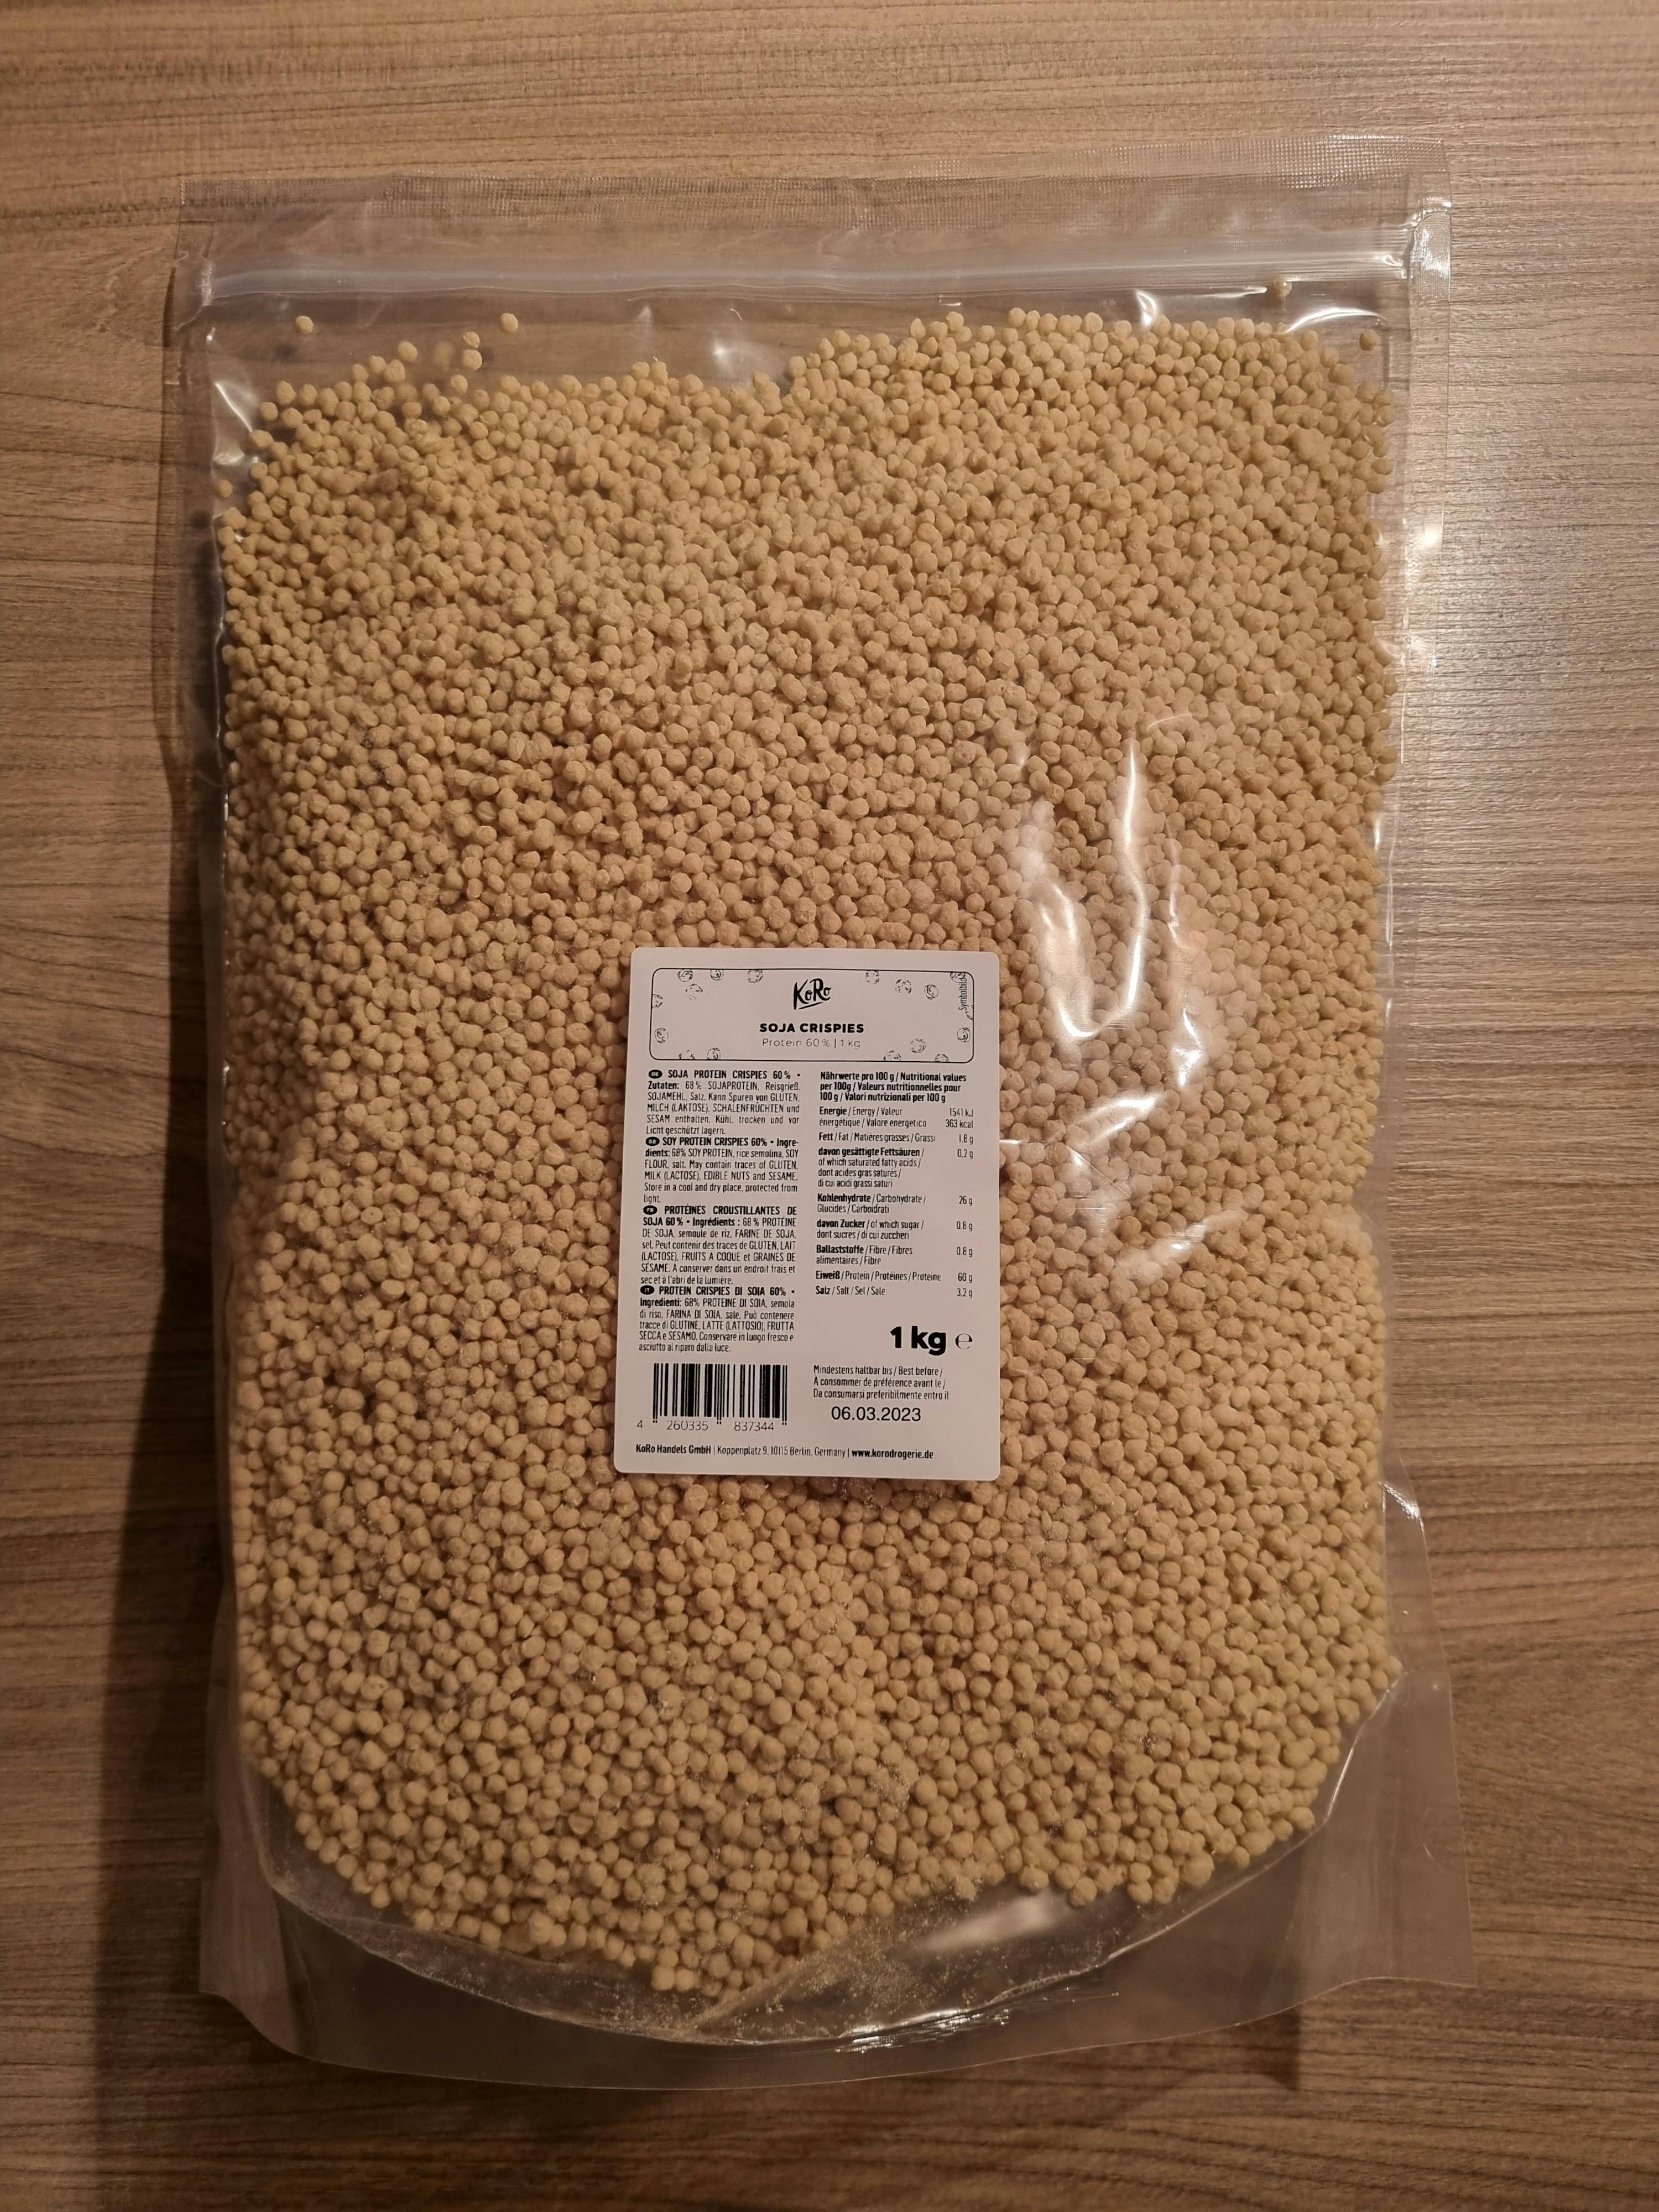 Soja crispies (60 %) 1 kg - Vegan